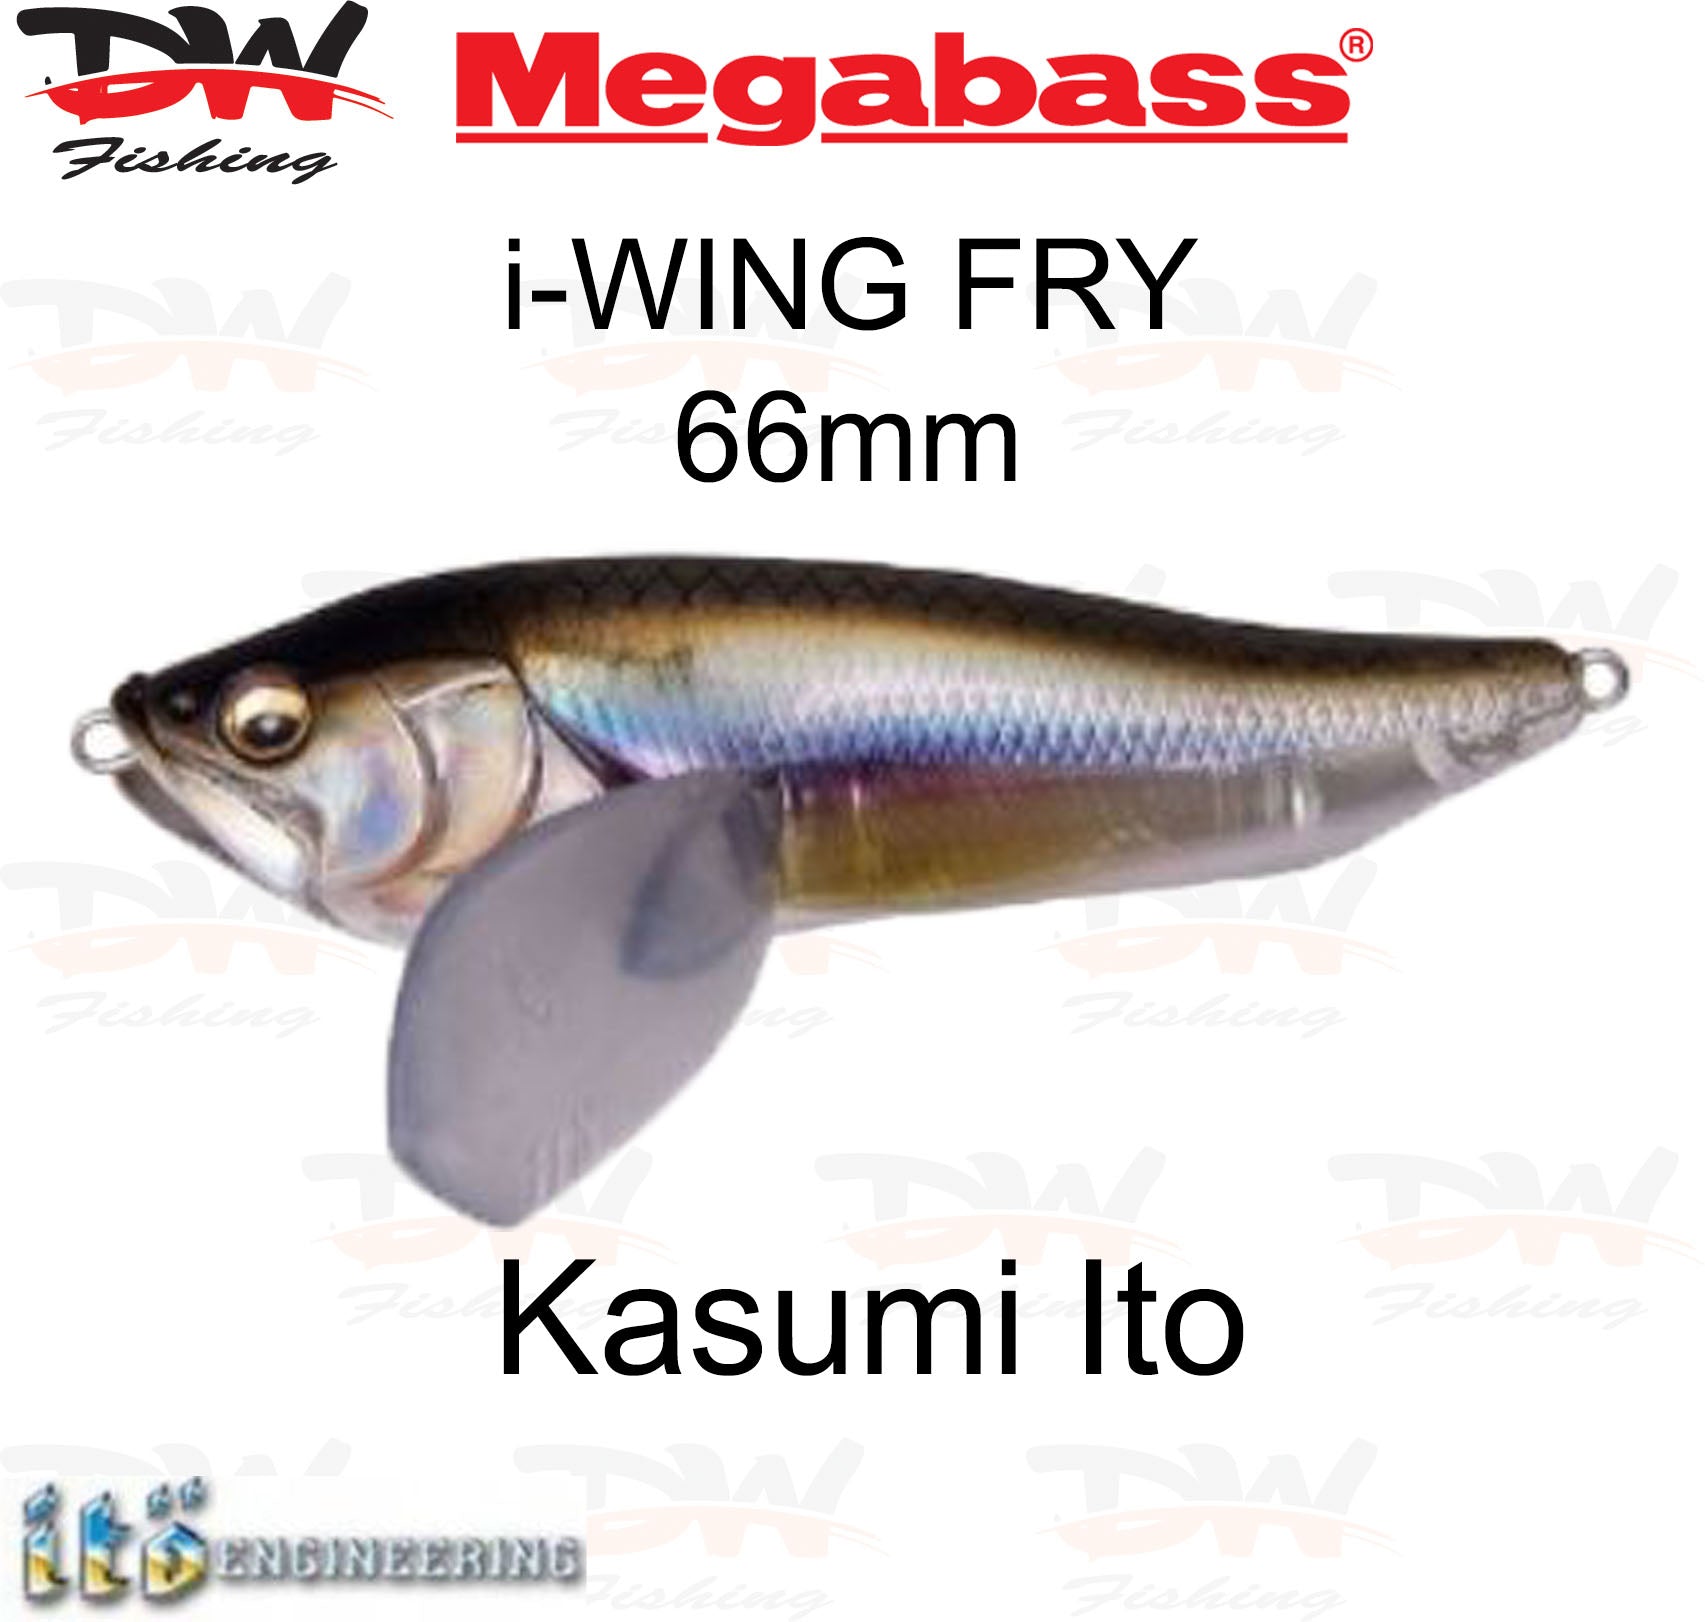 Megabass i-WING FRY surface lure single colour Kasumi Ito